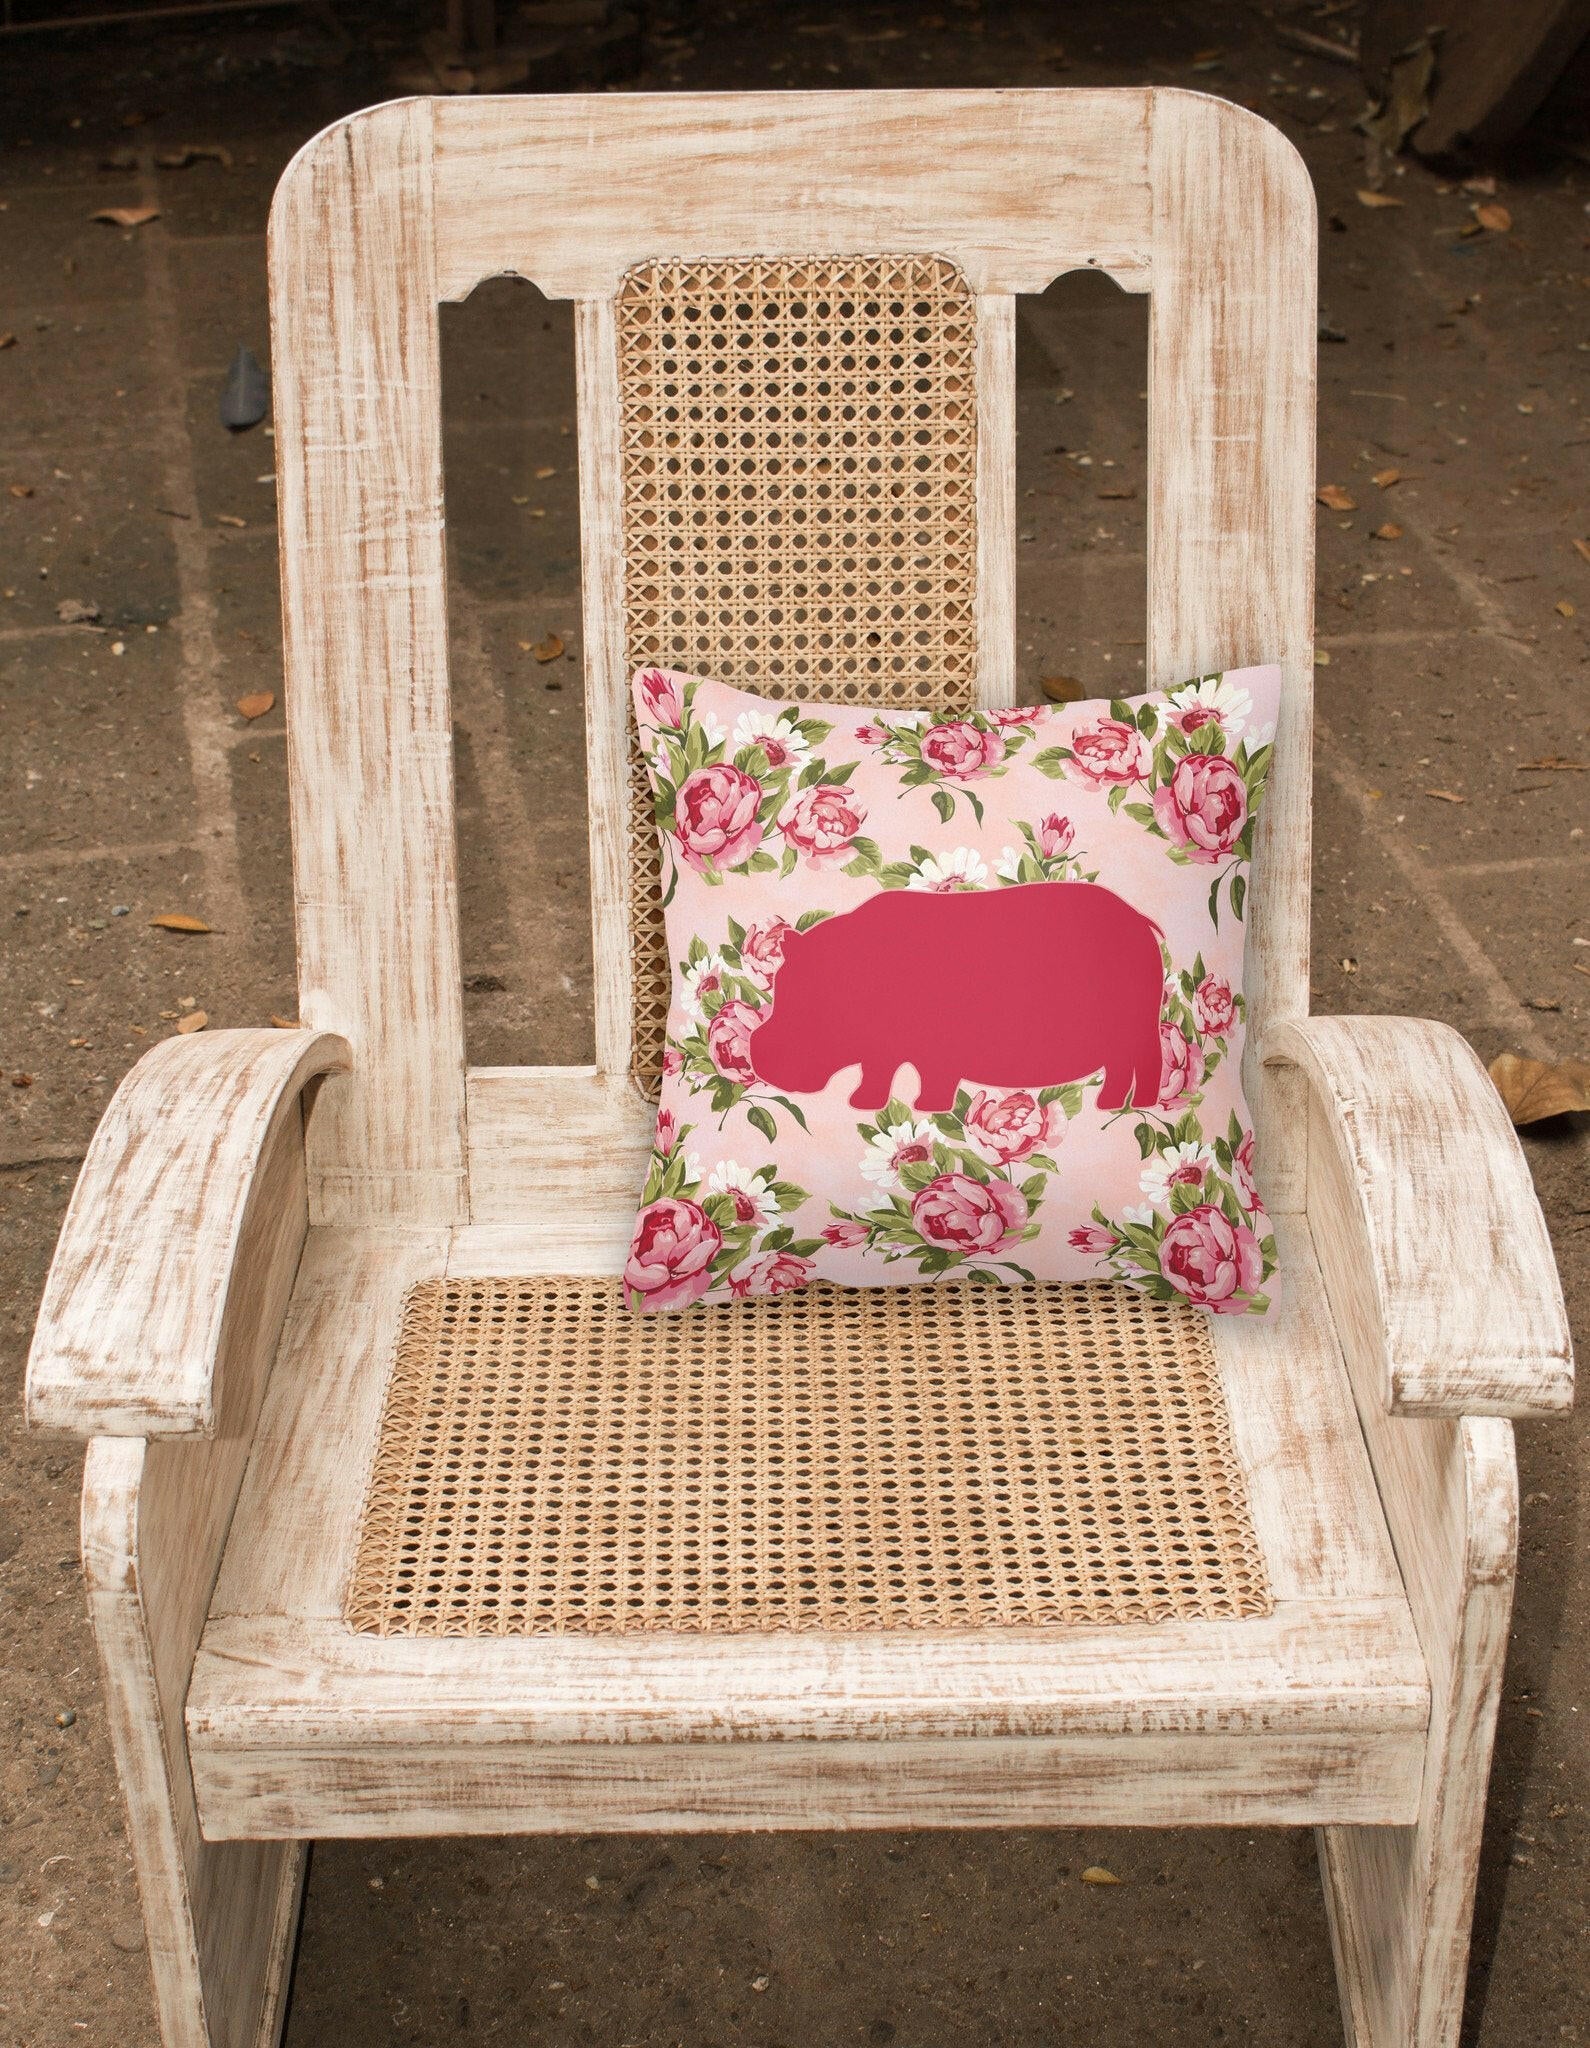 Hippopotamus Shabby Chic Pink Roses  Fabric Decorative Pillow BB1130-RS-PK-PW1414 - the-store.com